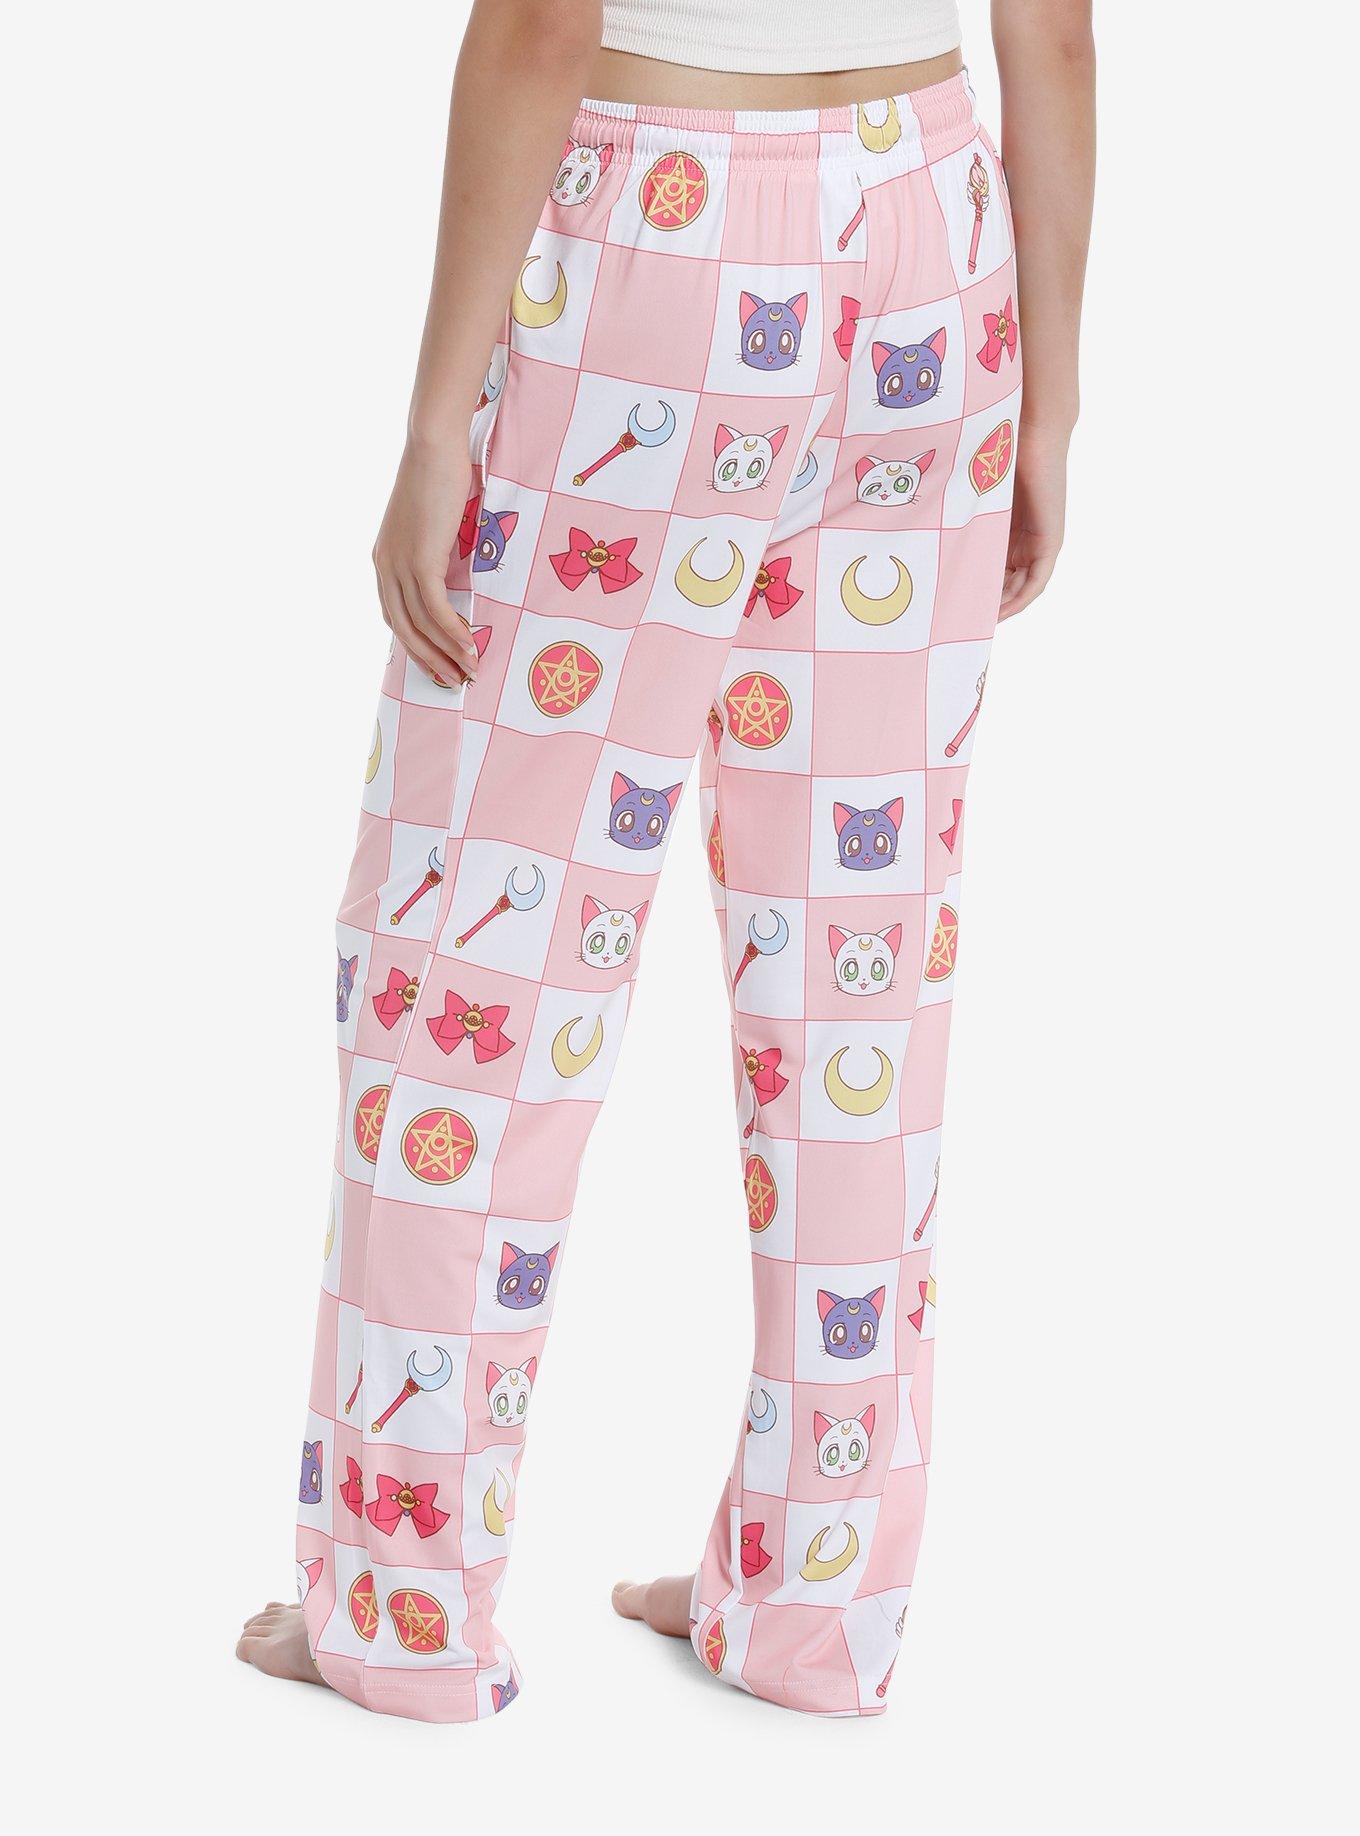 Sailor Moon Icons Grid Pajama Pants, PINK, alternate